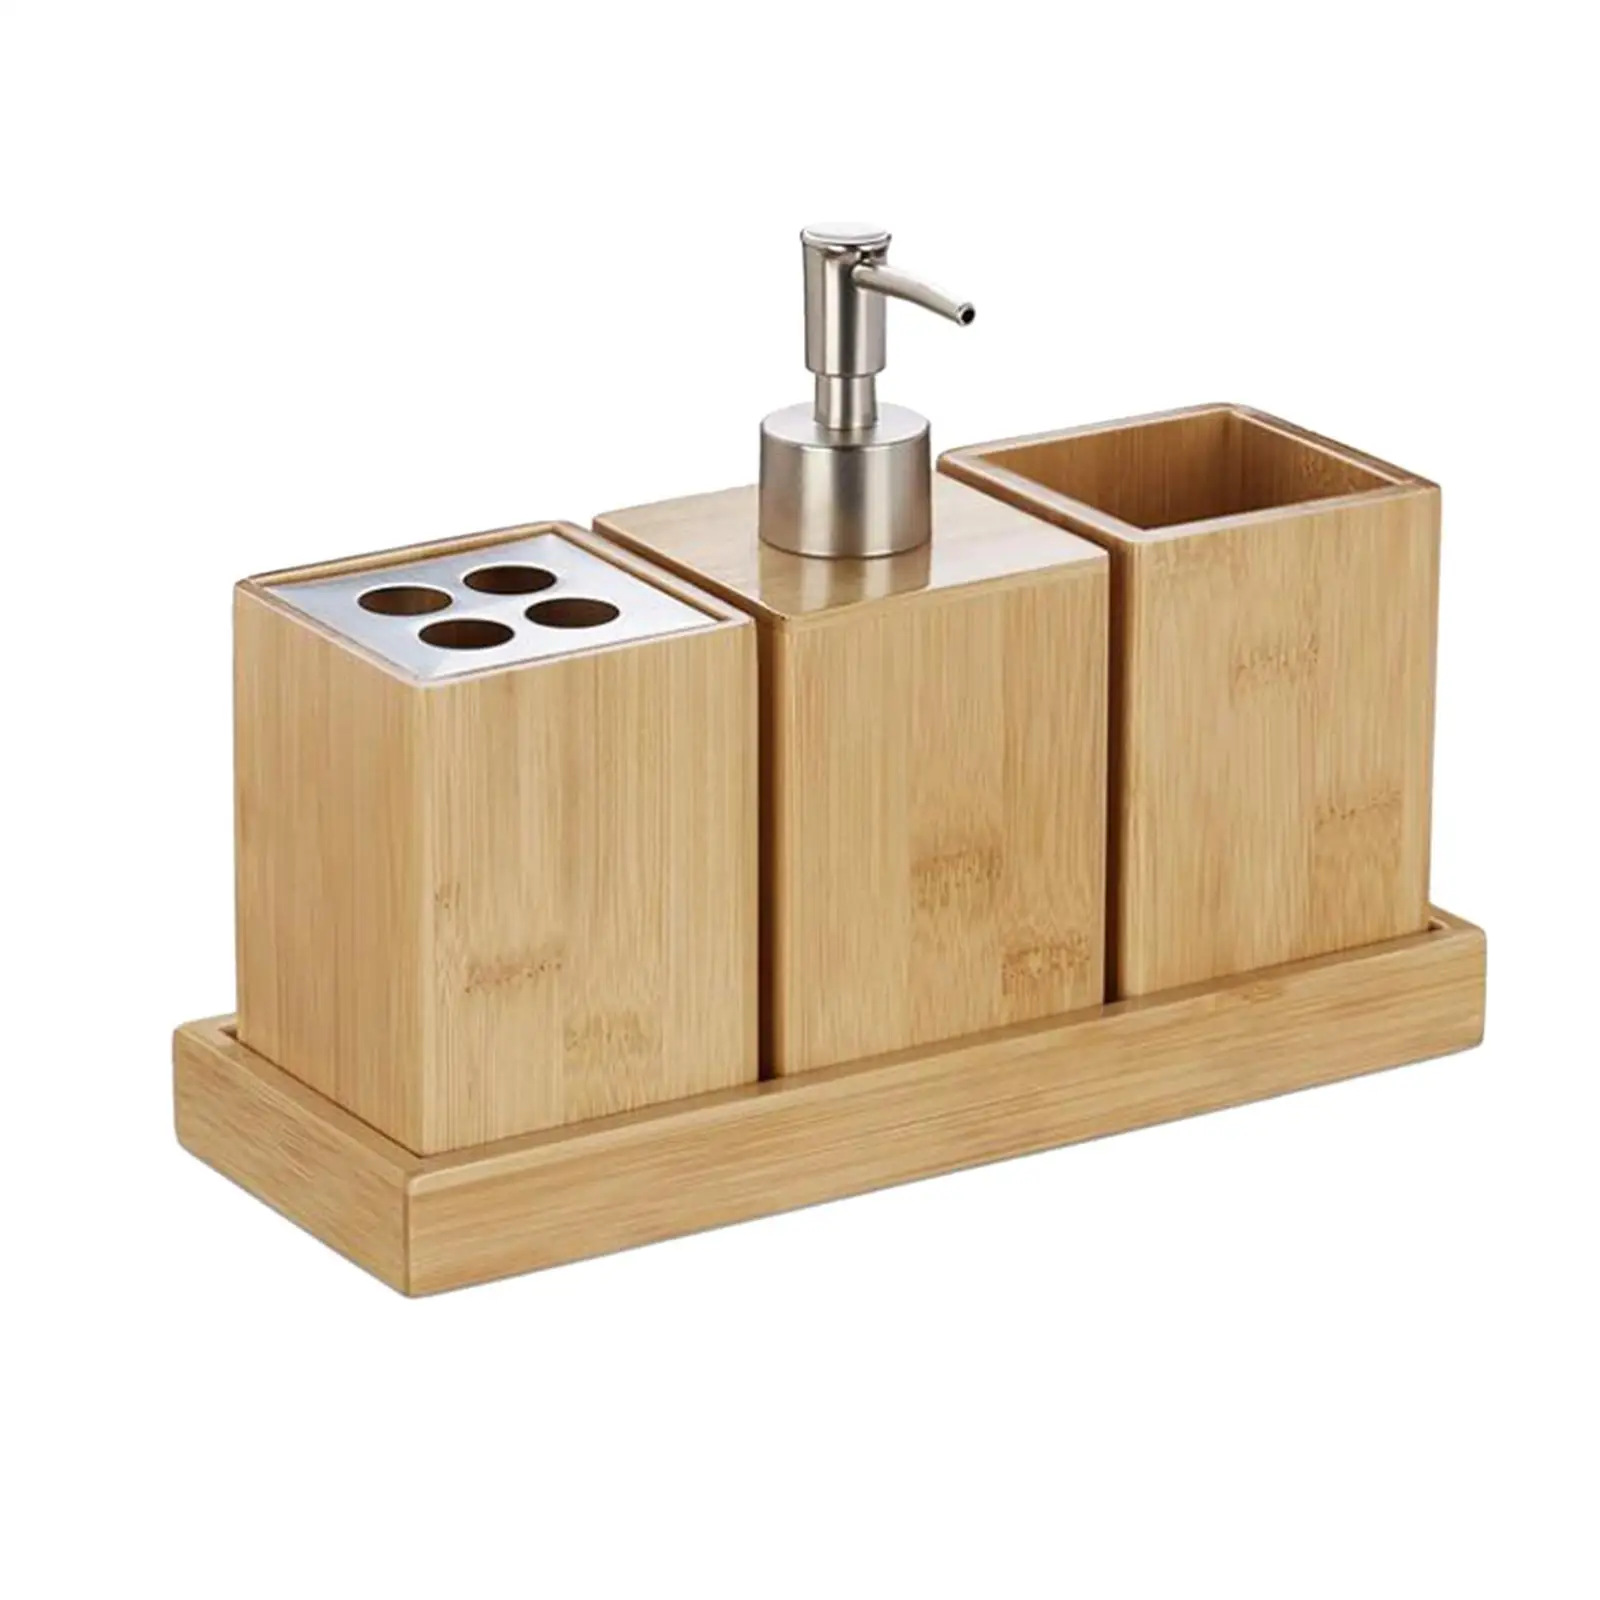 4x Bathroom Accessories Set Vanity Storage Organizer Tray for Bathroom Home